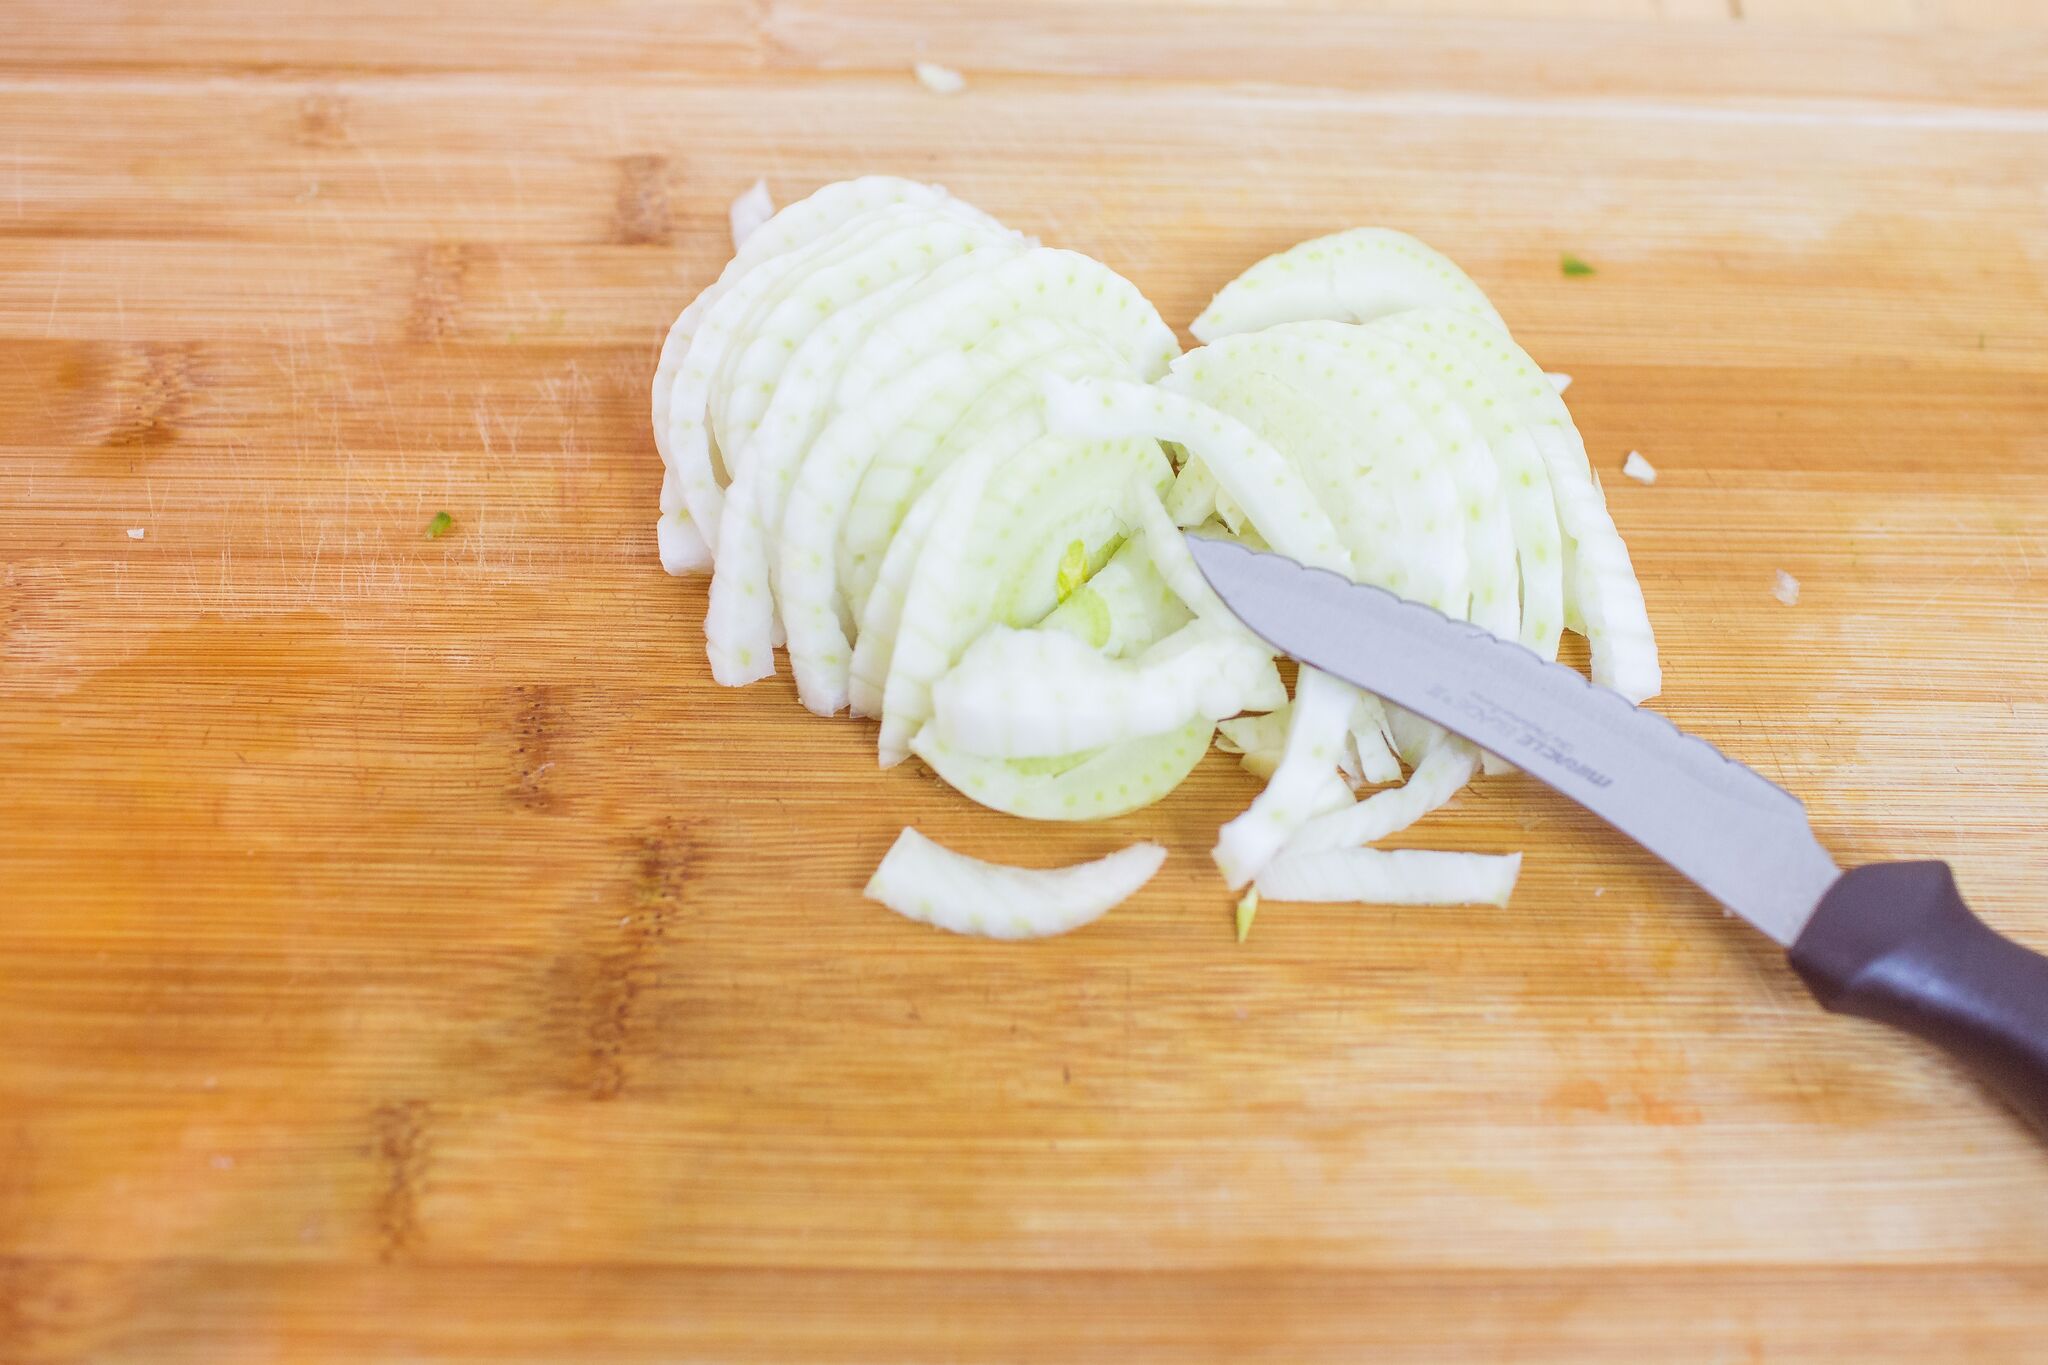 Slice fennel into thin pieces.